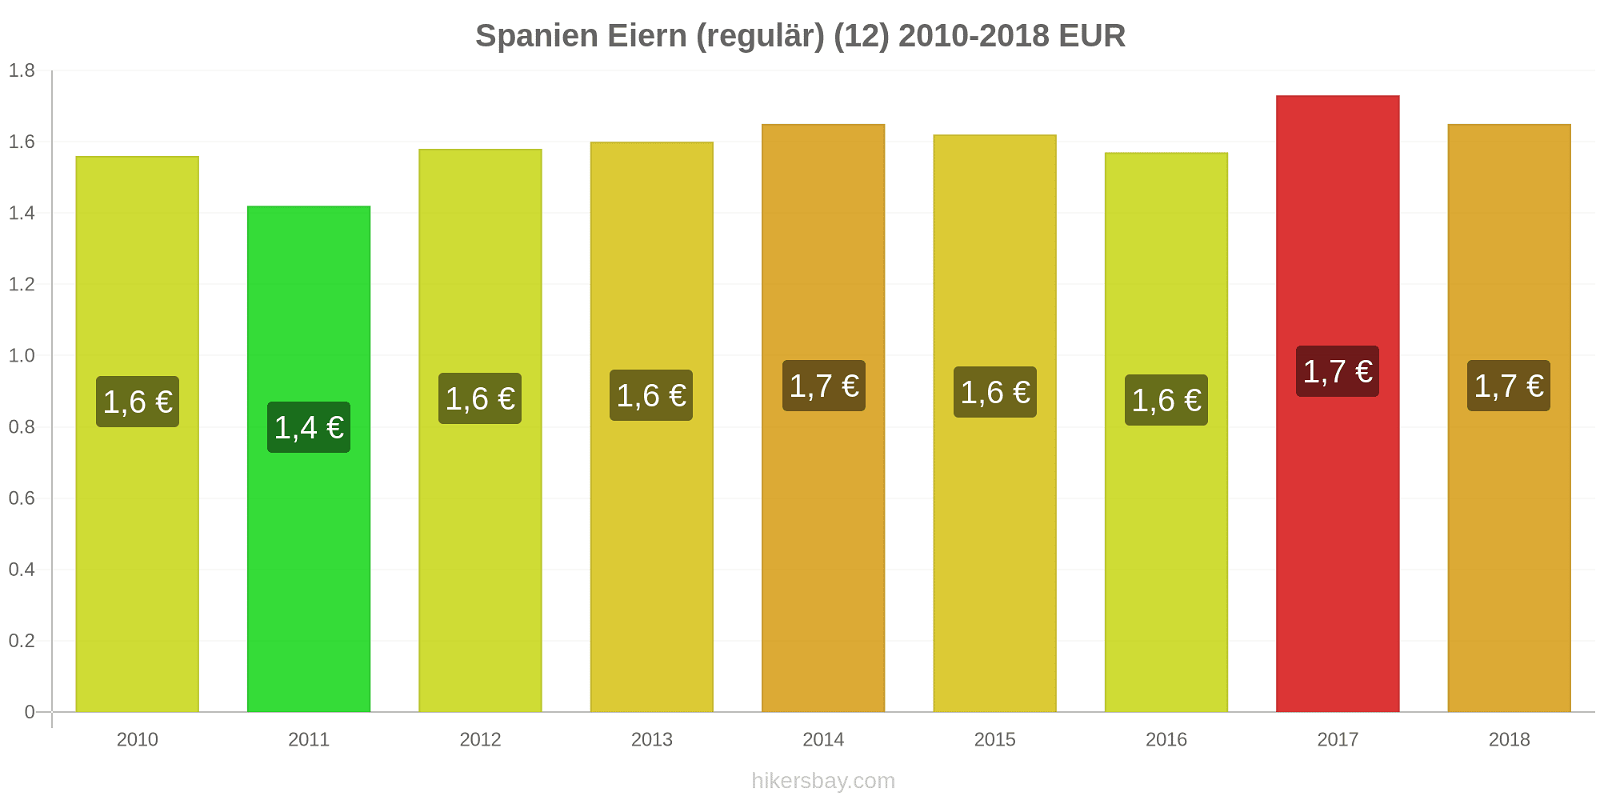 Spanien Preisänderungen Eier (regelmäßig) (12) hikersbay.com